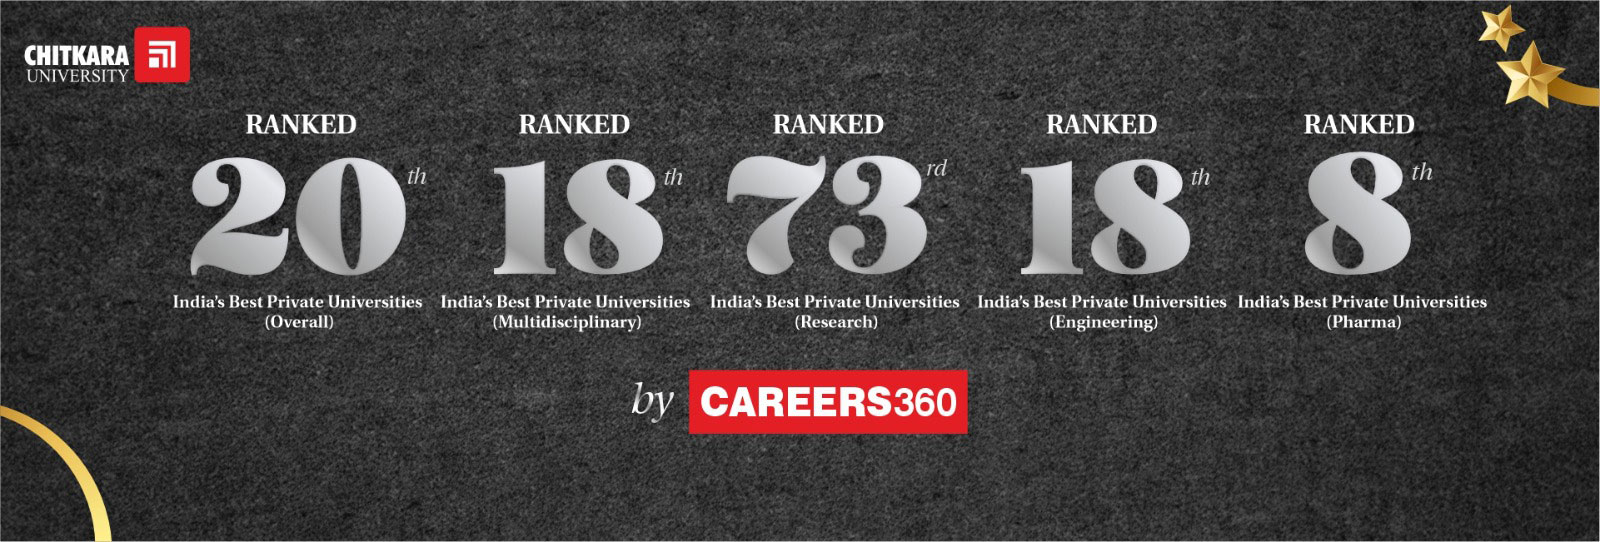 Careers 360 Rankings Across Discipline - Chitkara University